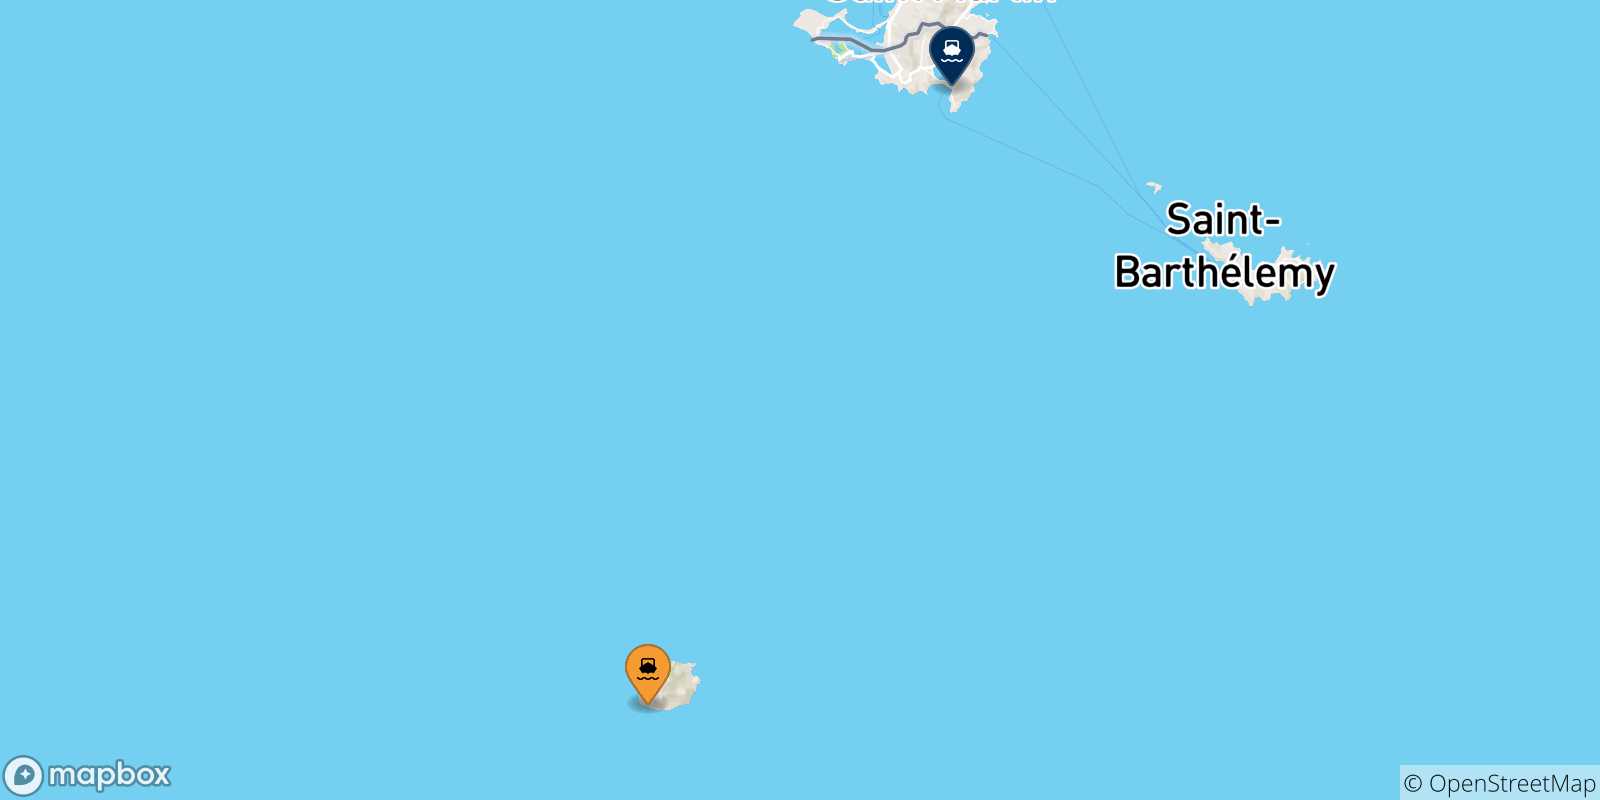 Mappa delle possibili rotte tra Saba e i Caraibi Olandesi